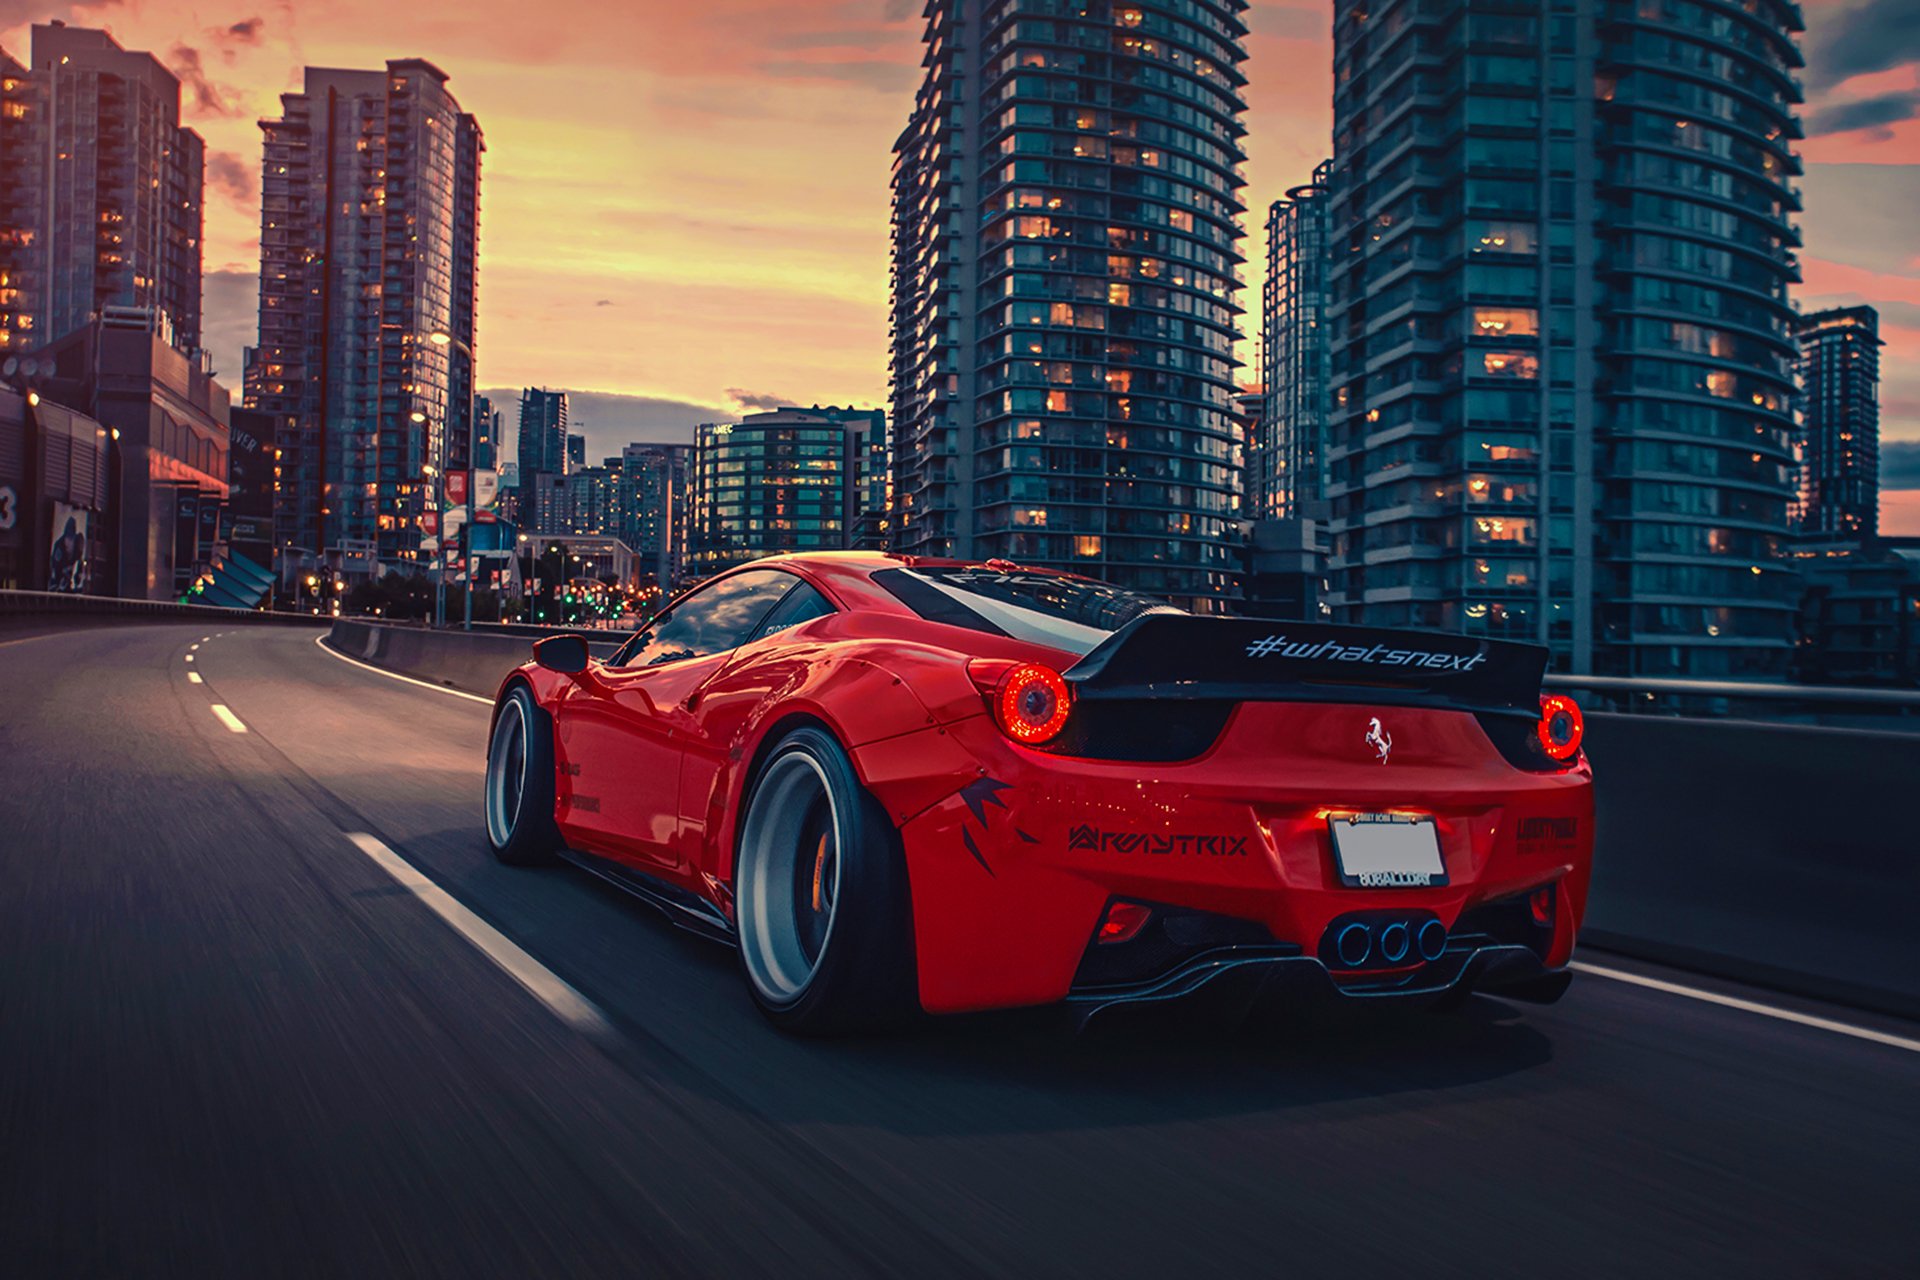 Ferrari Car HD Image download